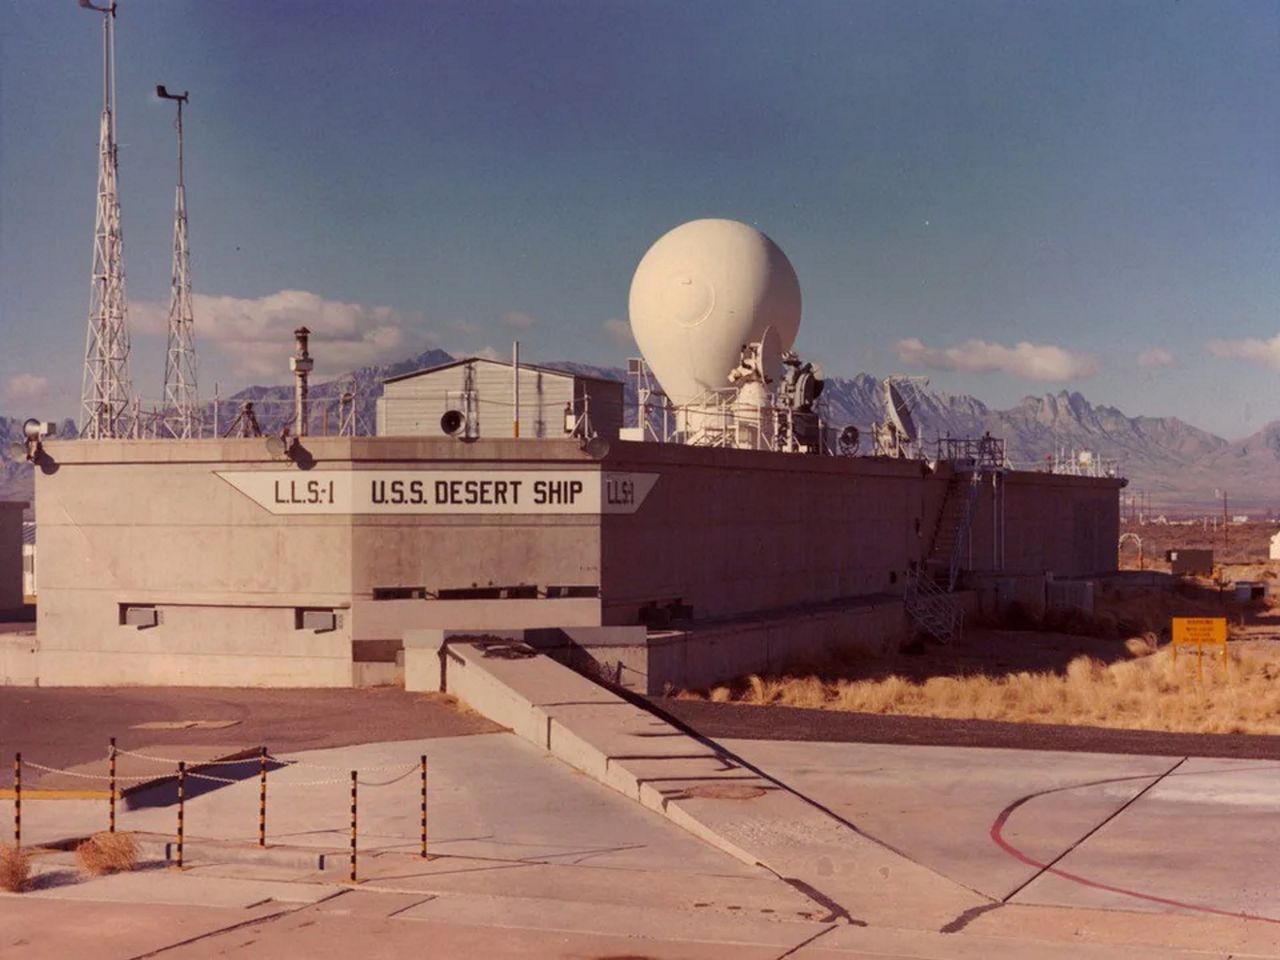 USS Desert Ship (LLS-1) - amerykański "okręt" na pustyni